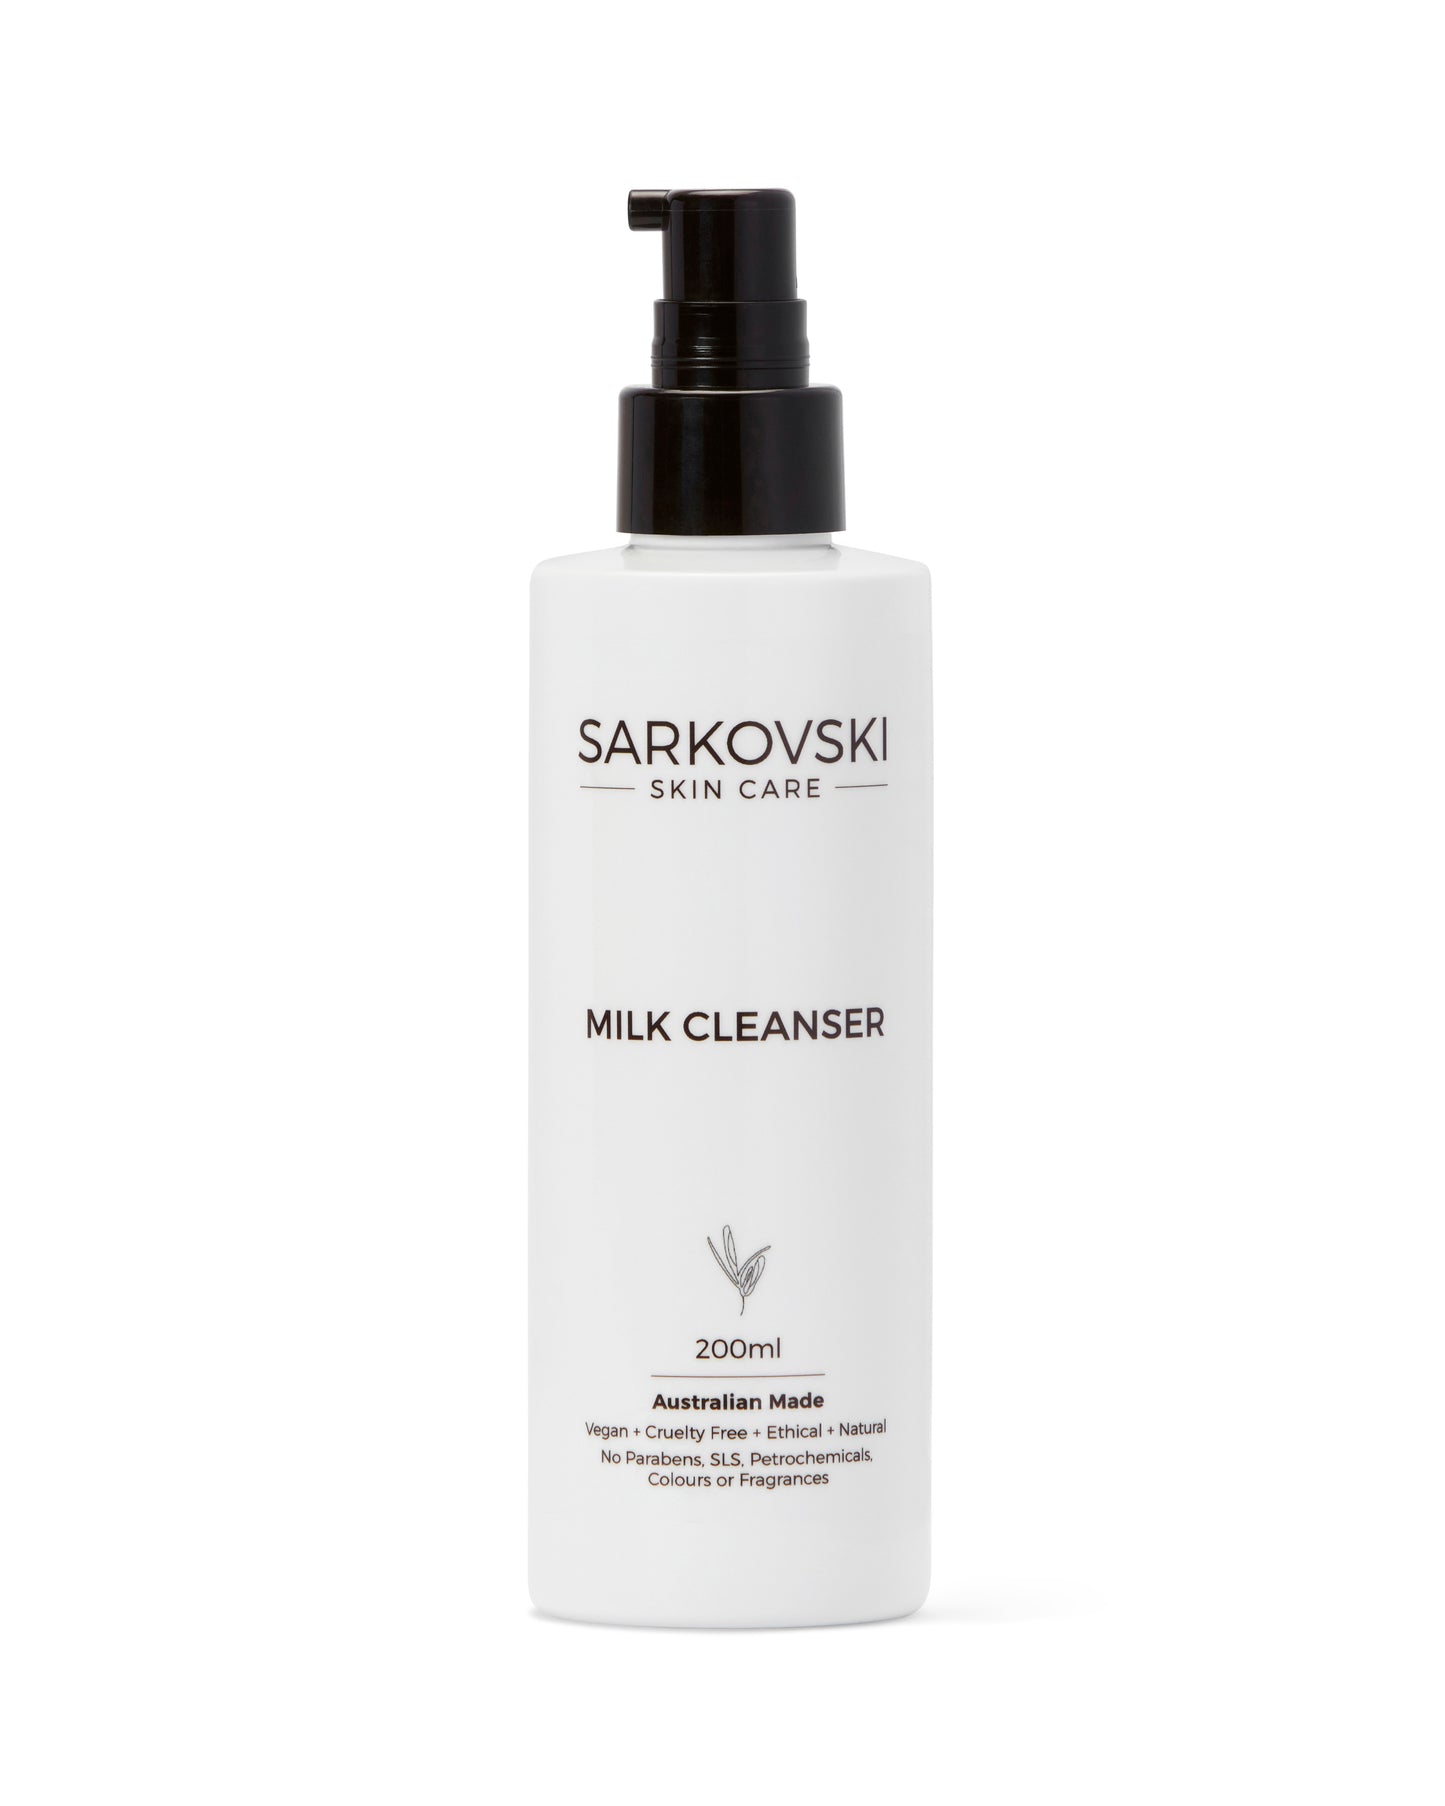 SARKOVSKI Skin Care Milk Cleanser